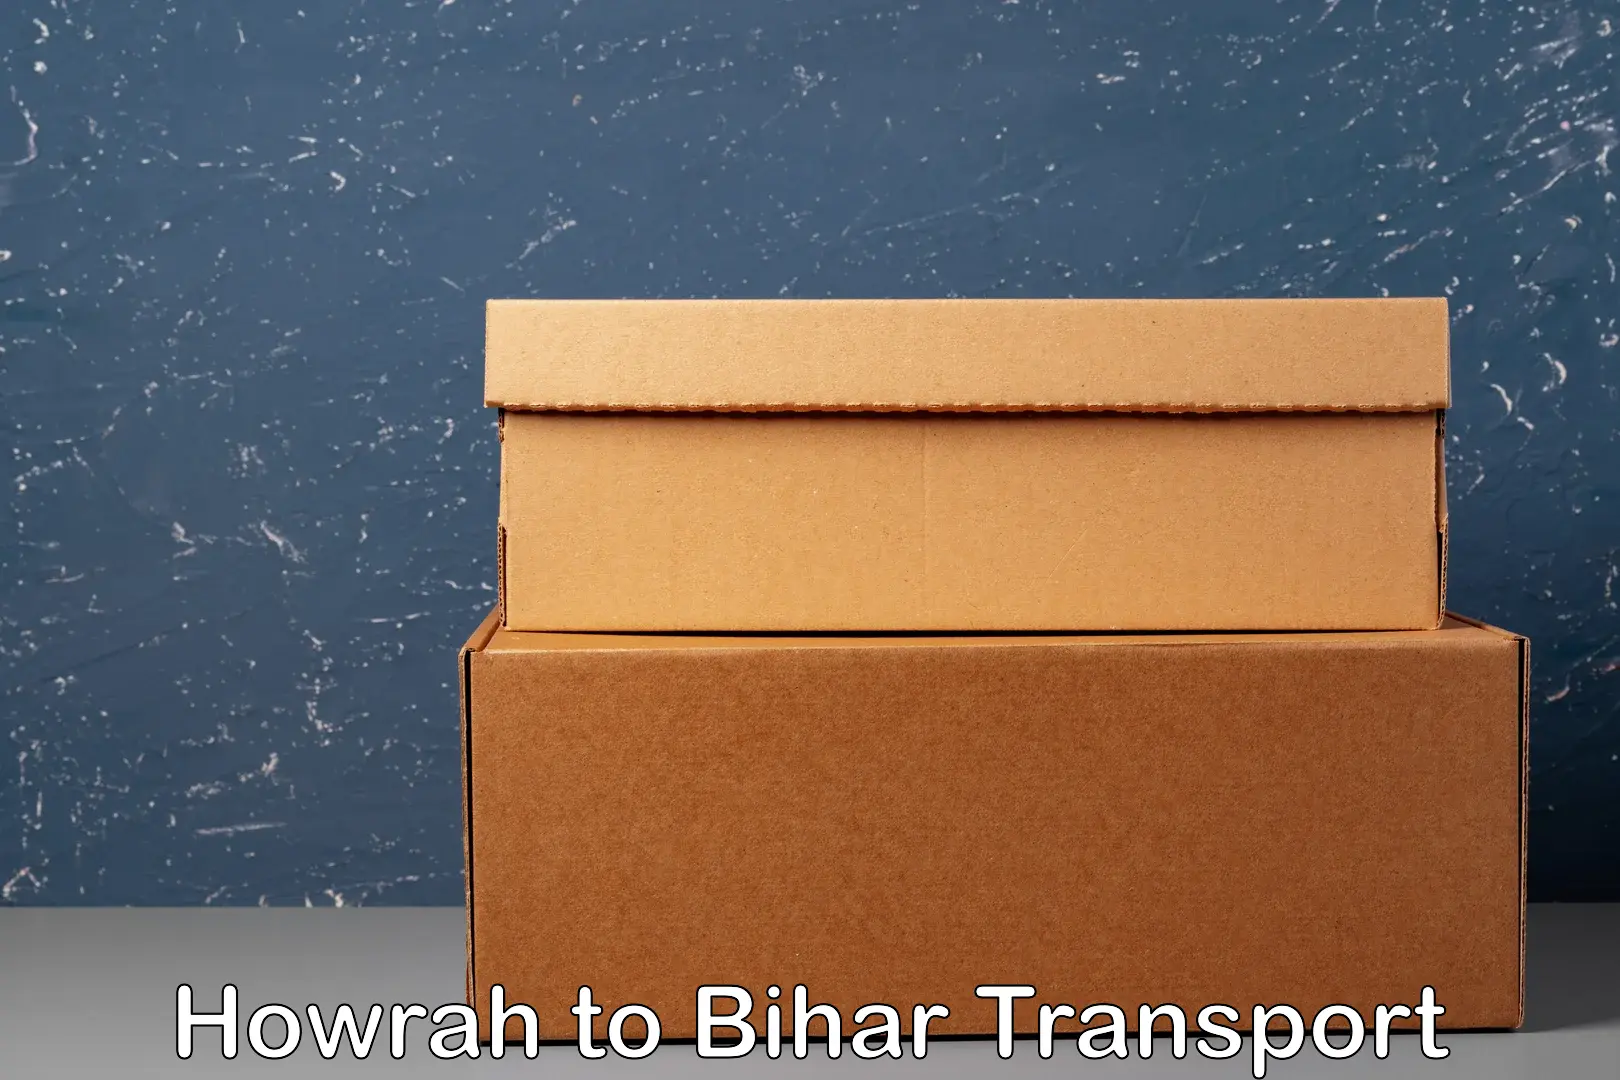 Shipping partner Howrah to Bihar